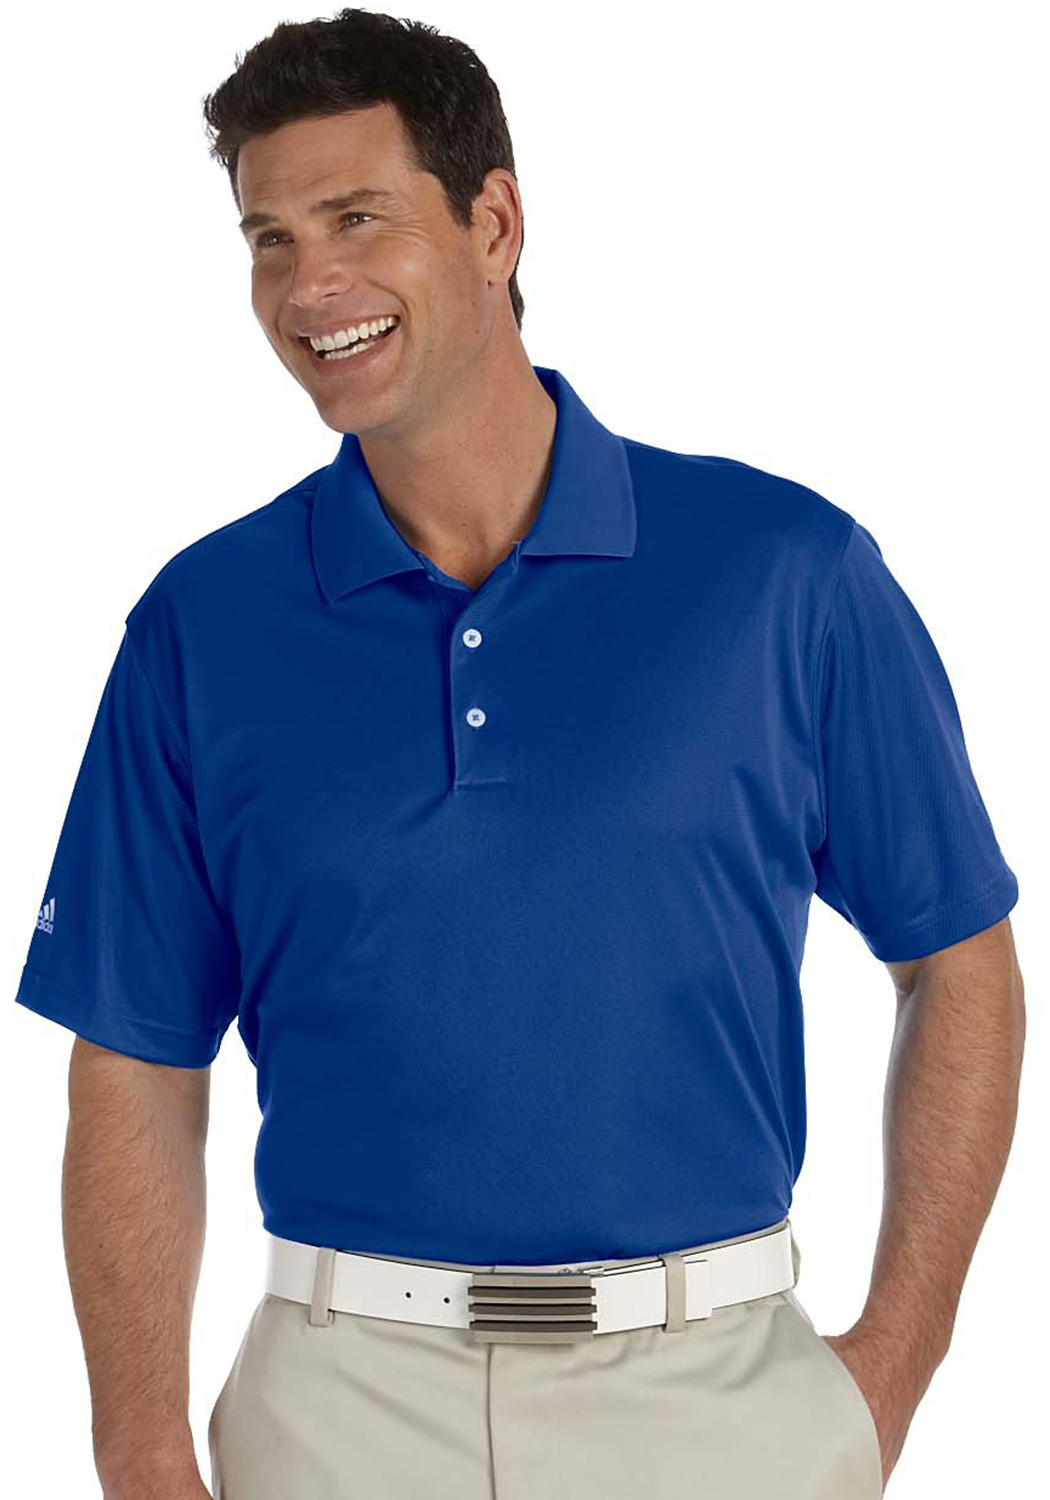 E103468 Adidas Golf Mens Climalite Basic Polo Shirt